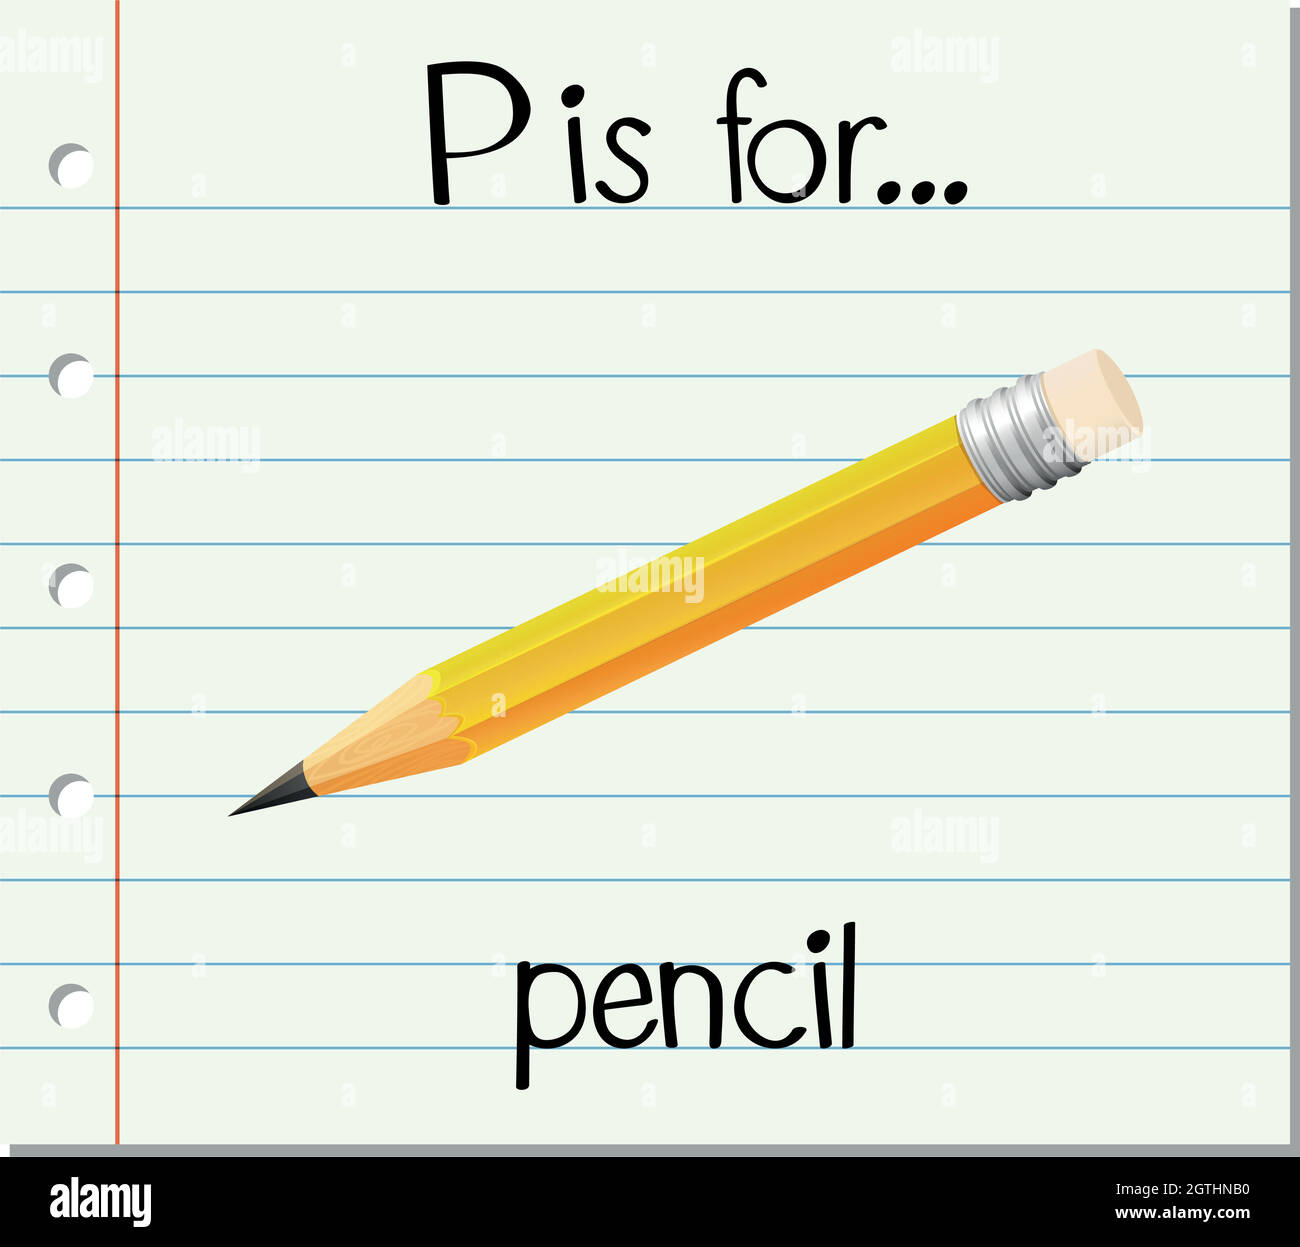 Pen по английски. P is for. Пенсил на английском. P is for Pencil. Pen карточка.